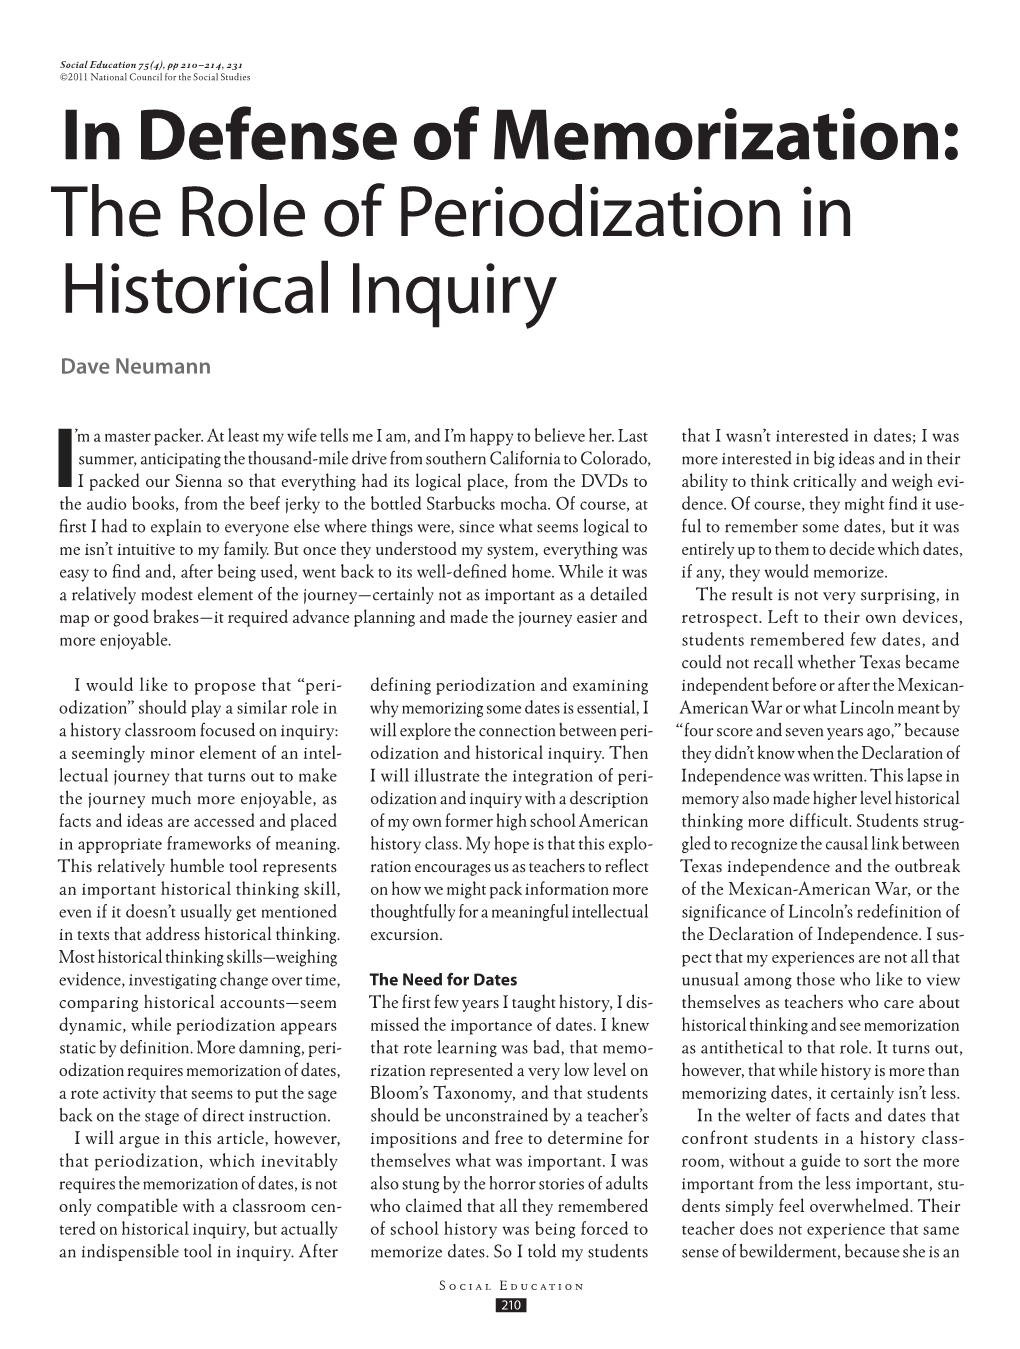 In Defense of Memorization: the Role of Periodization in Historical Inquiry